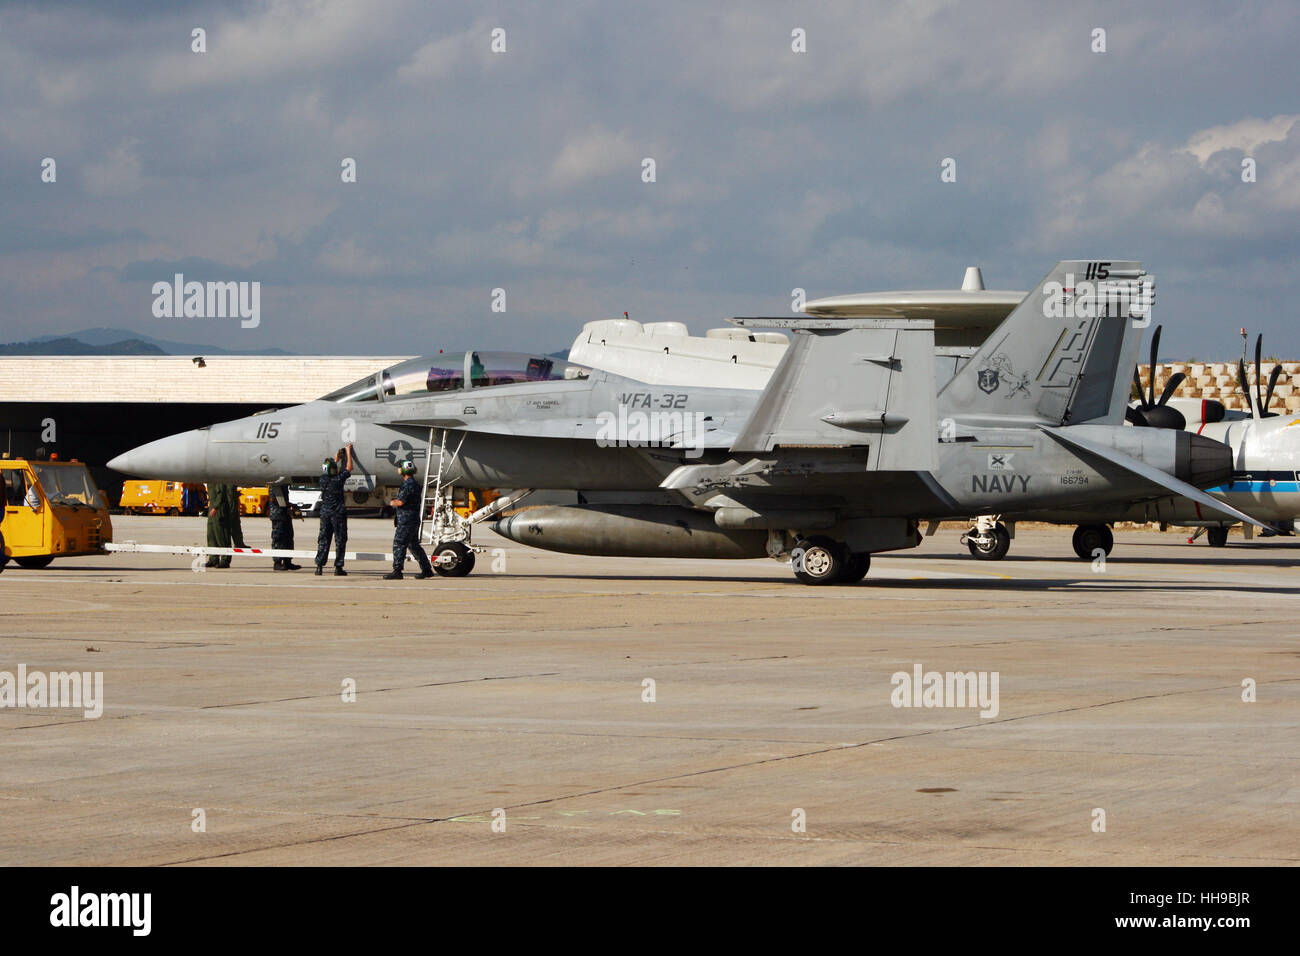 Us Navy f/a-18f super hornet da VFA-32 a 100 anni-aeronavale su airshow hyeres airbase. Foto Stock